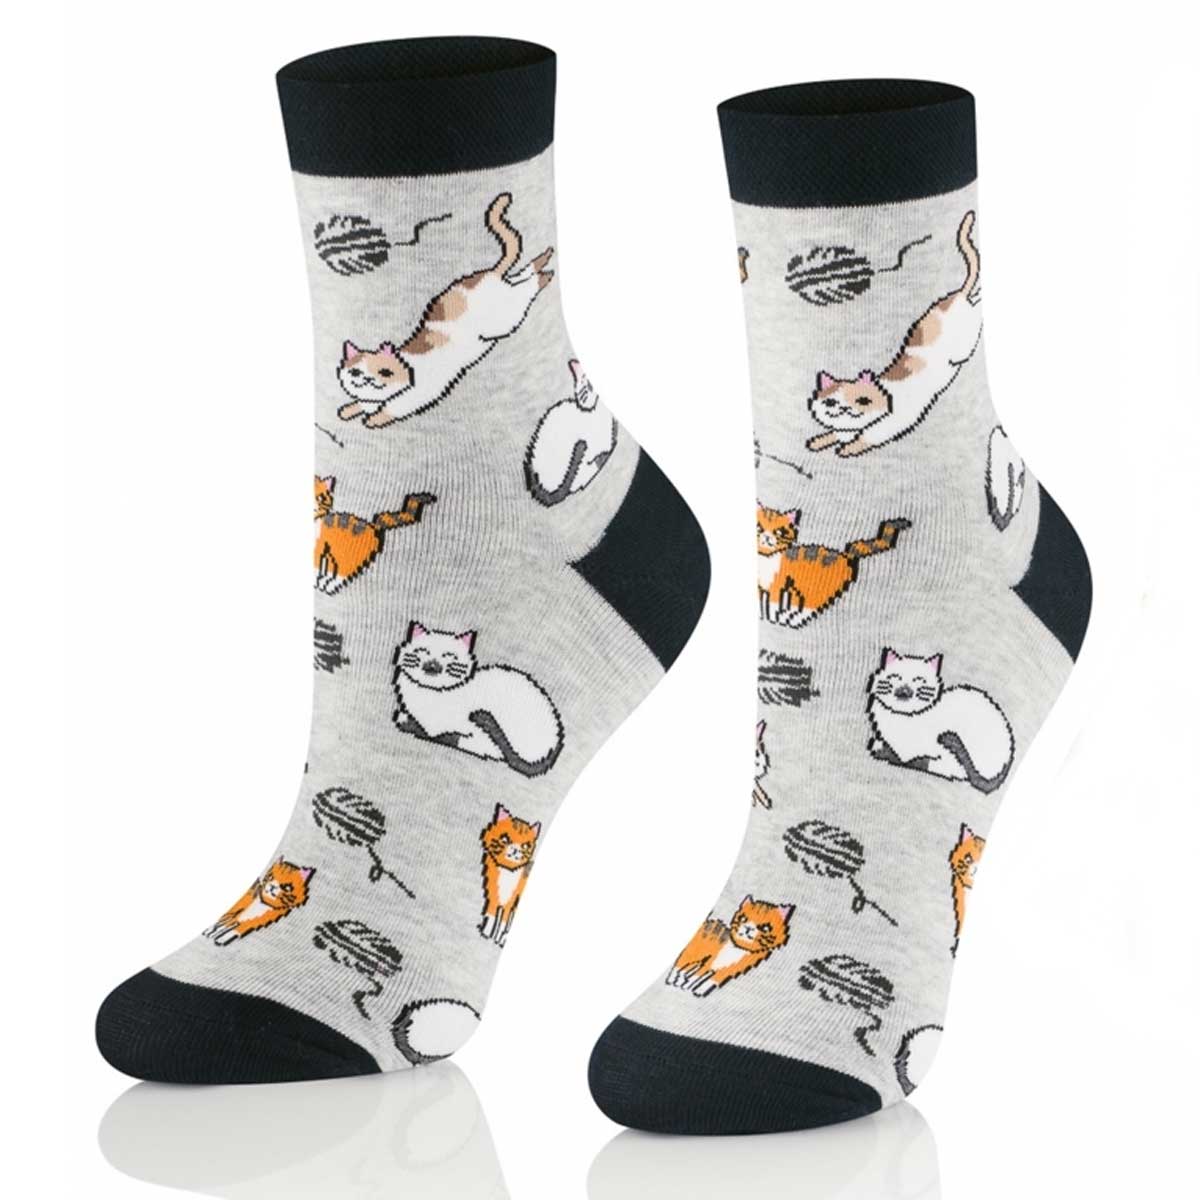 Cotton socks with cat motif